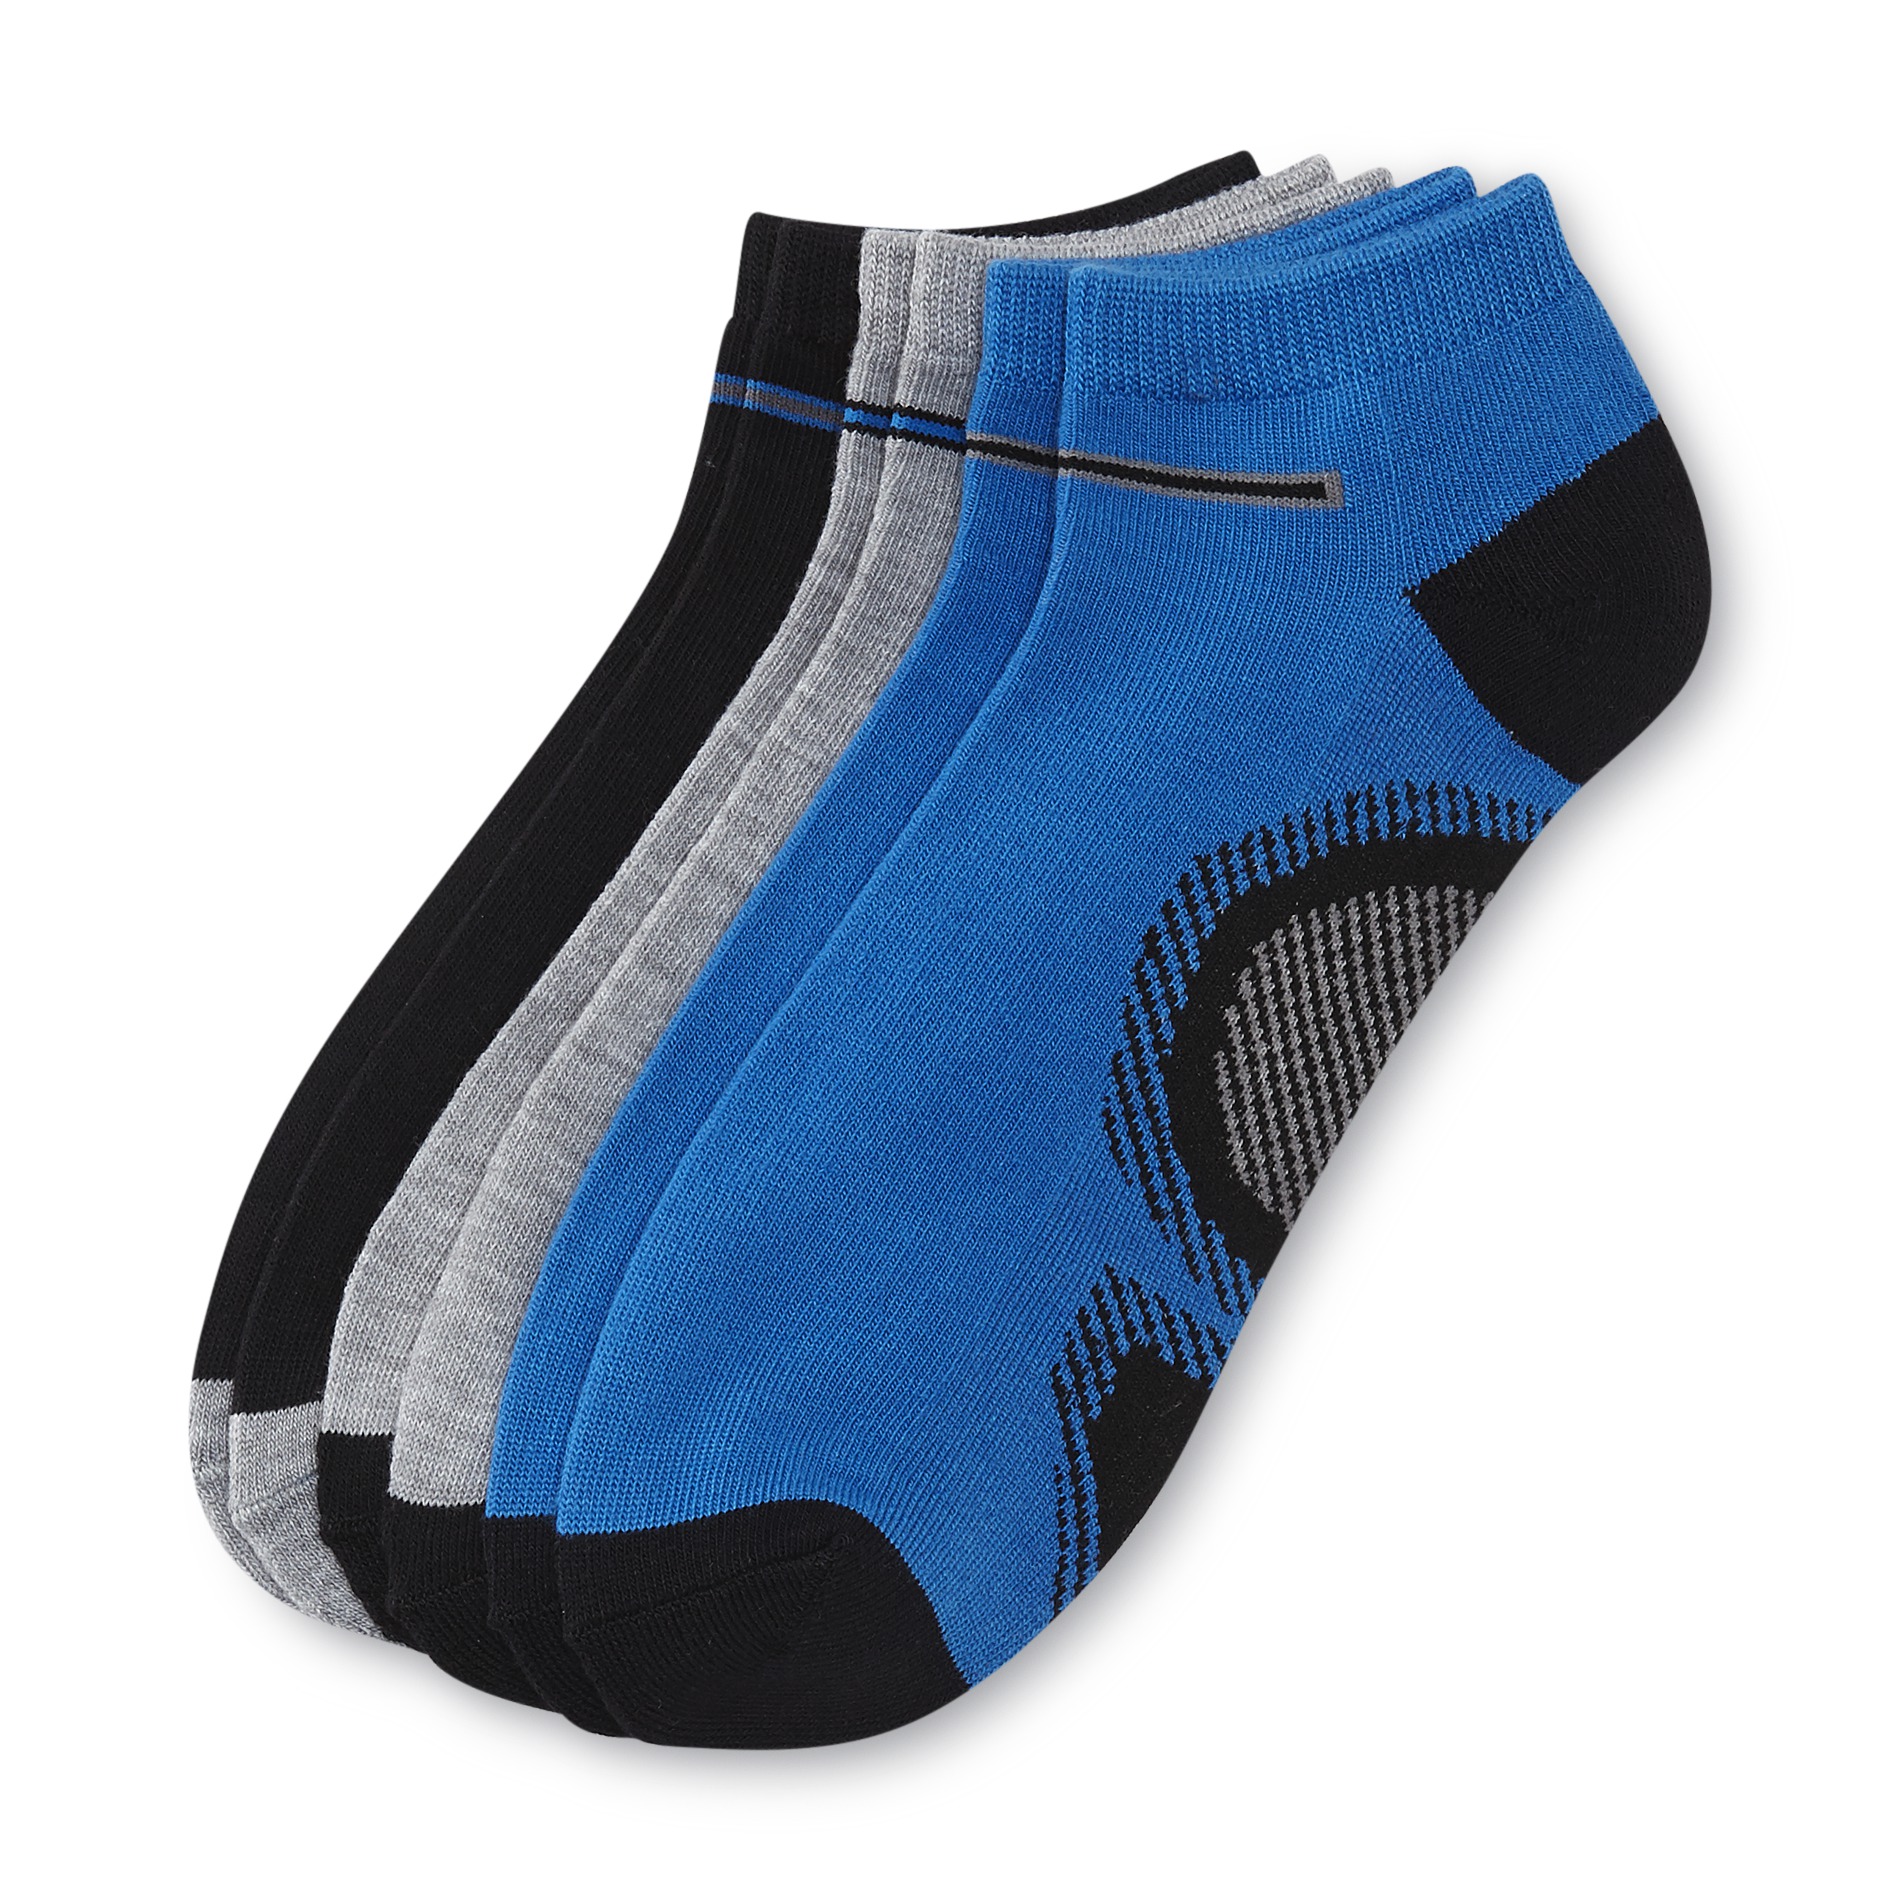 Everlast® Men's 3Pairs Performance LowCut Socks